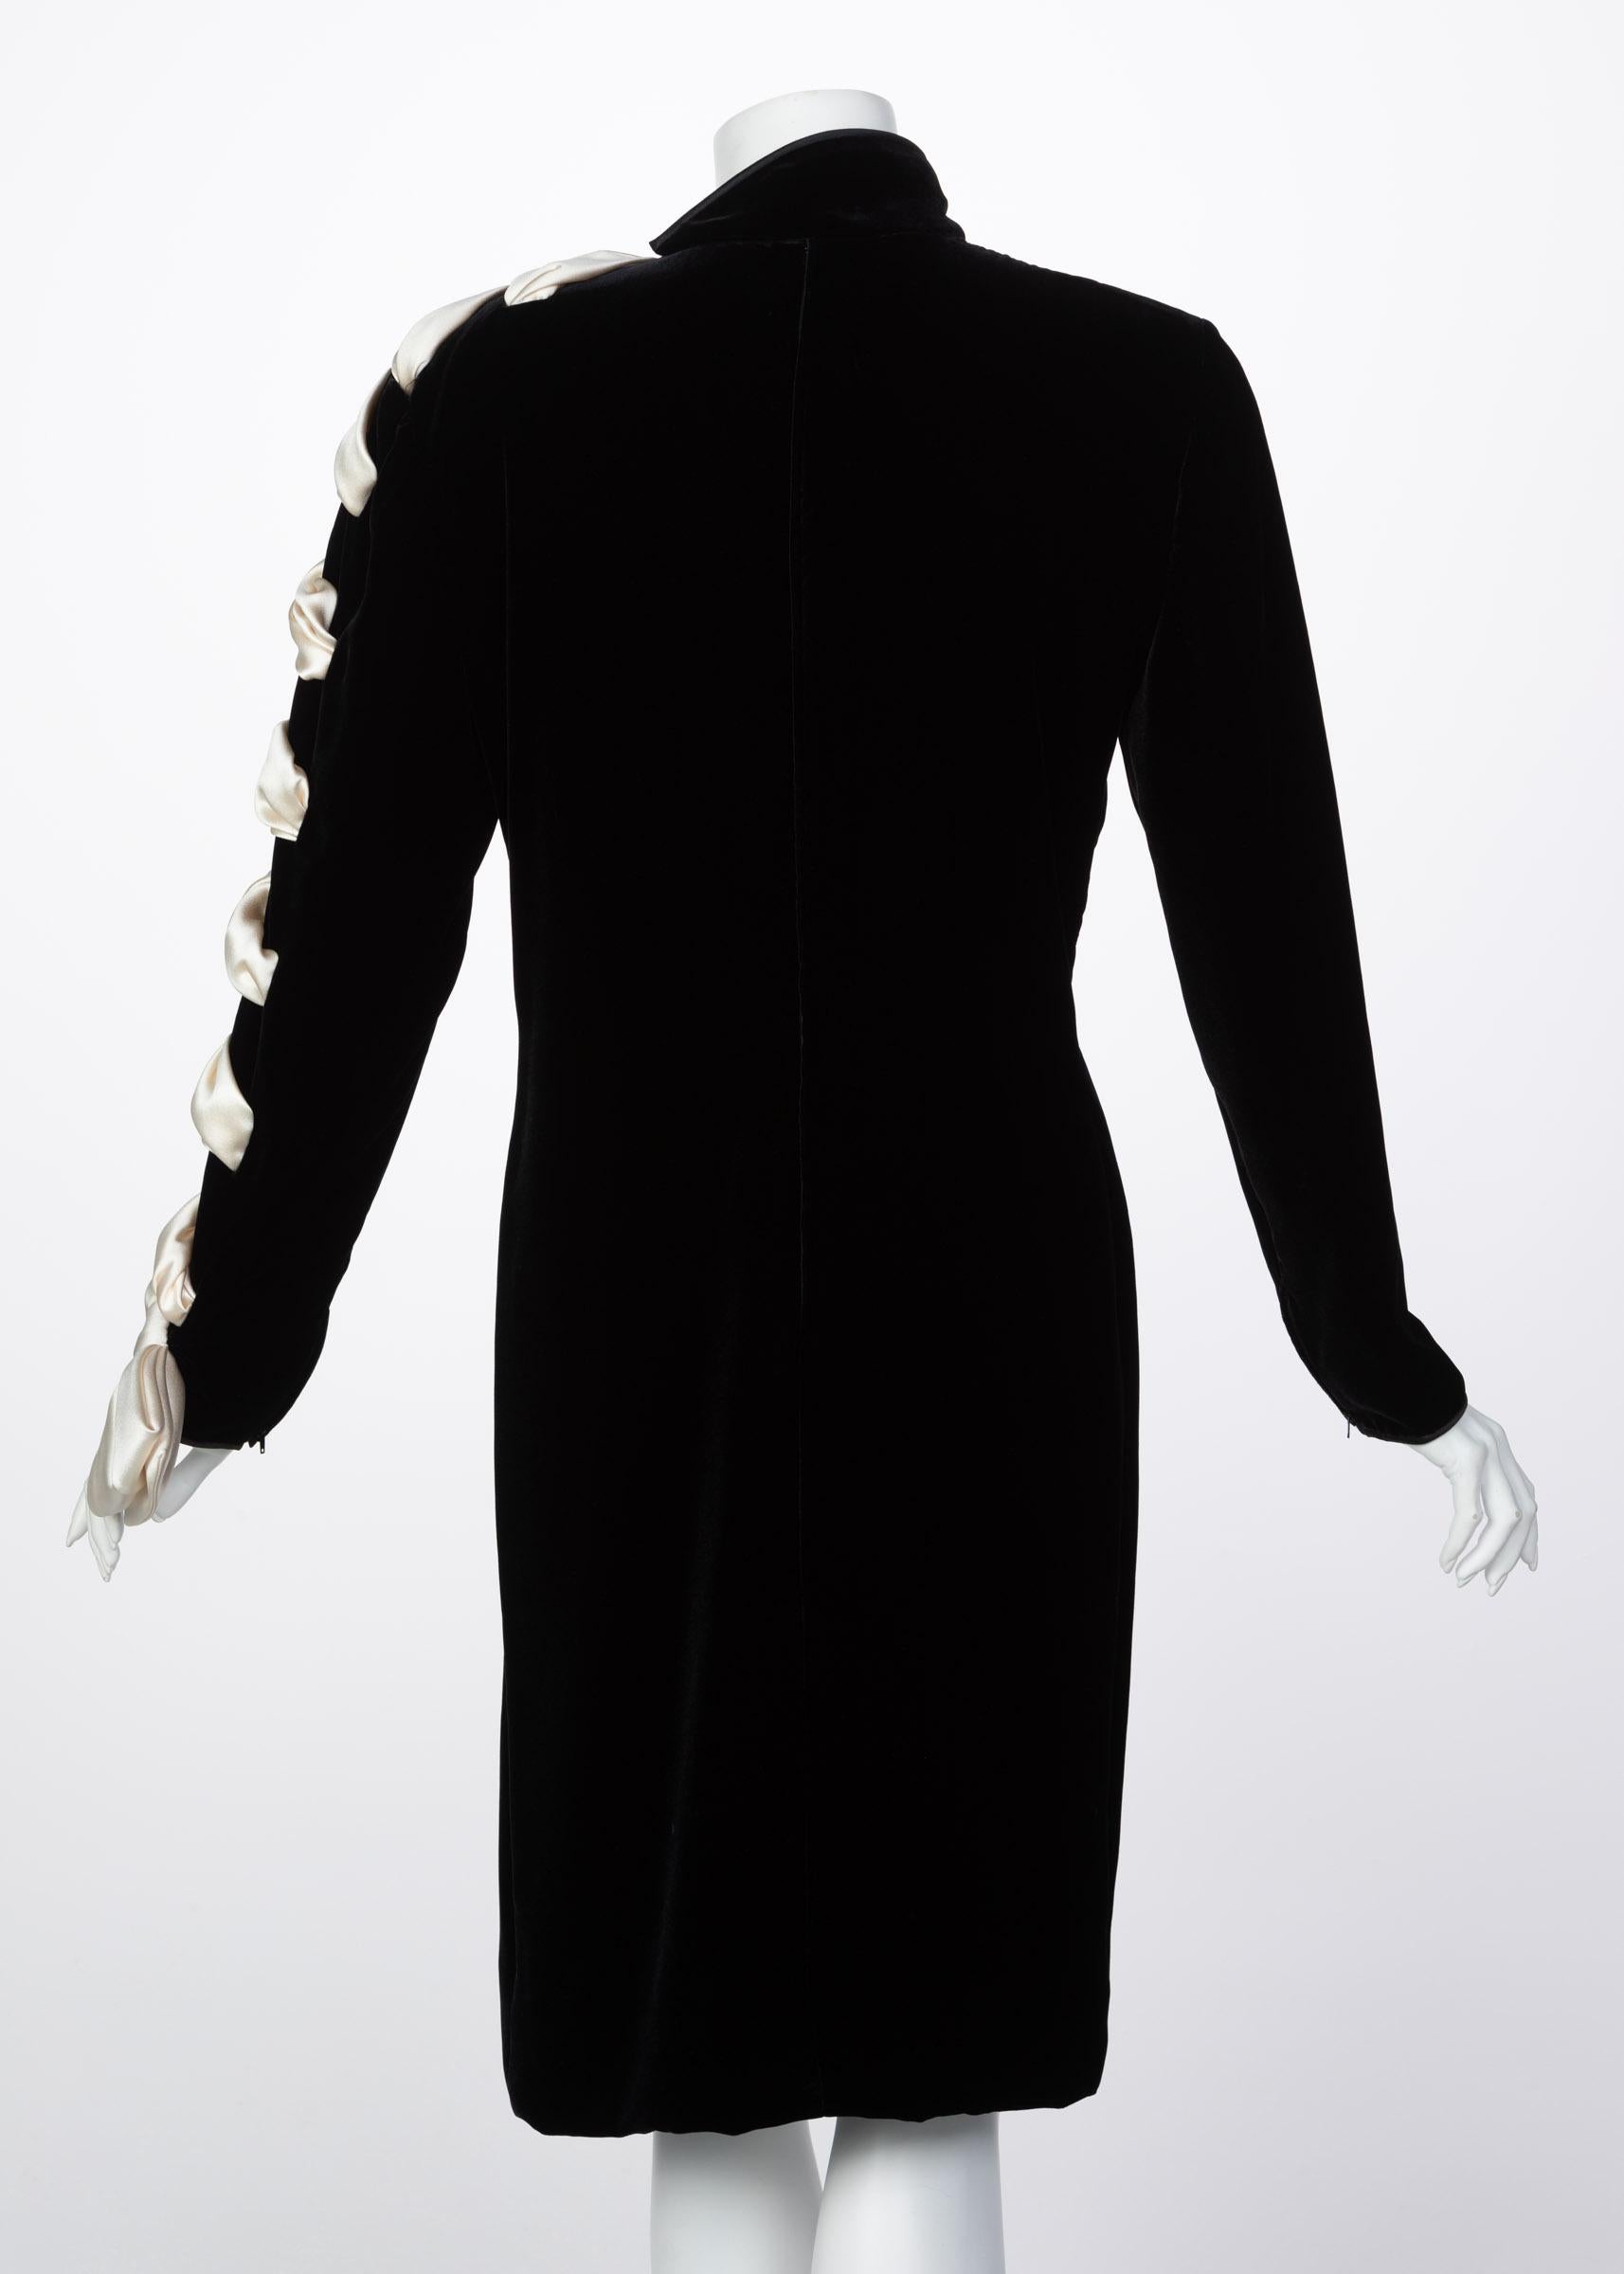 Valentino Black Velvet Ivory Satin Ribbon Bow Dress, 1980s 4